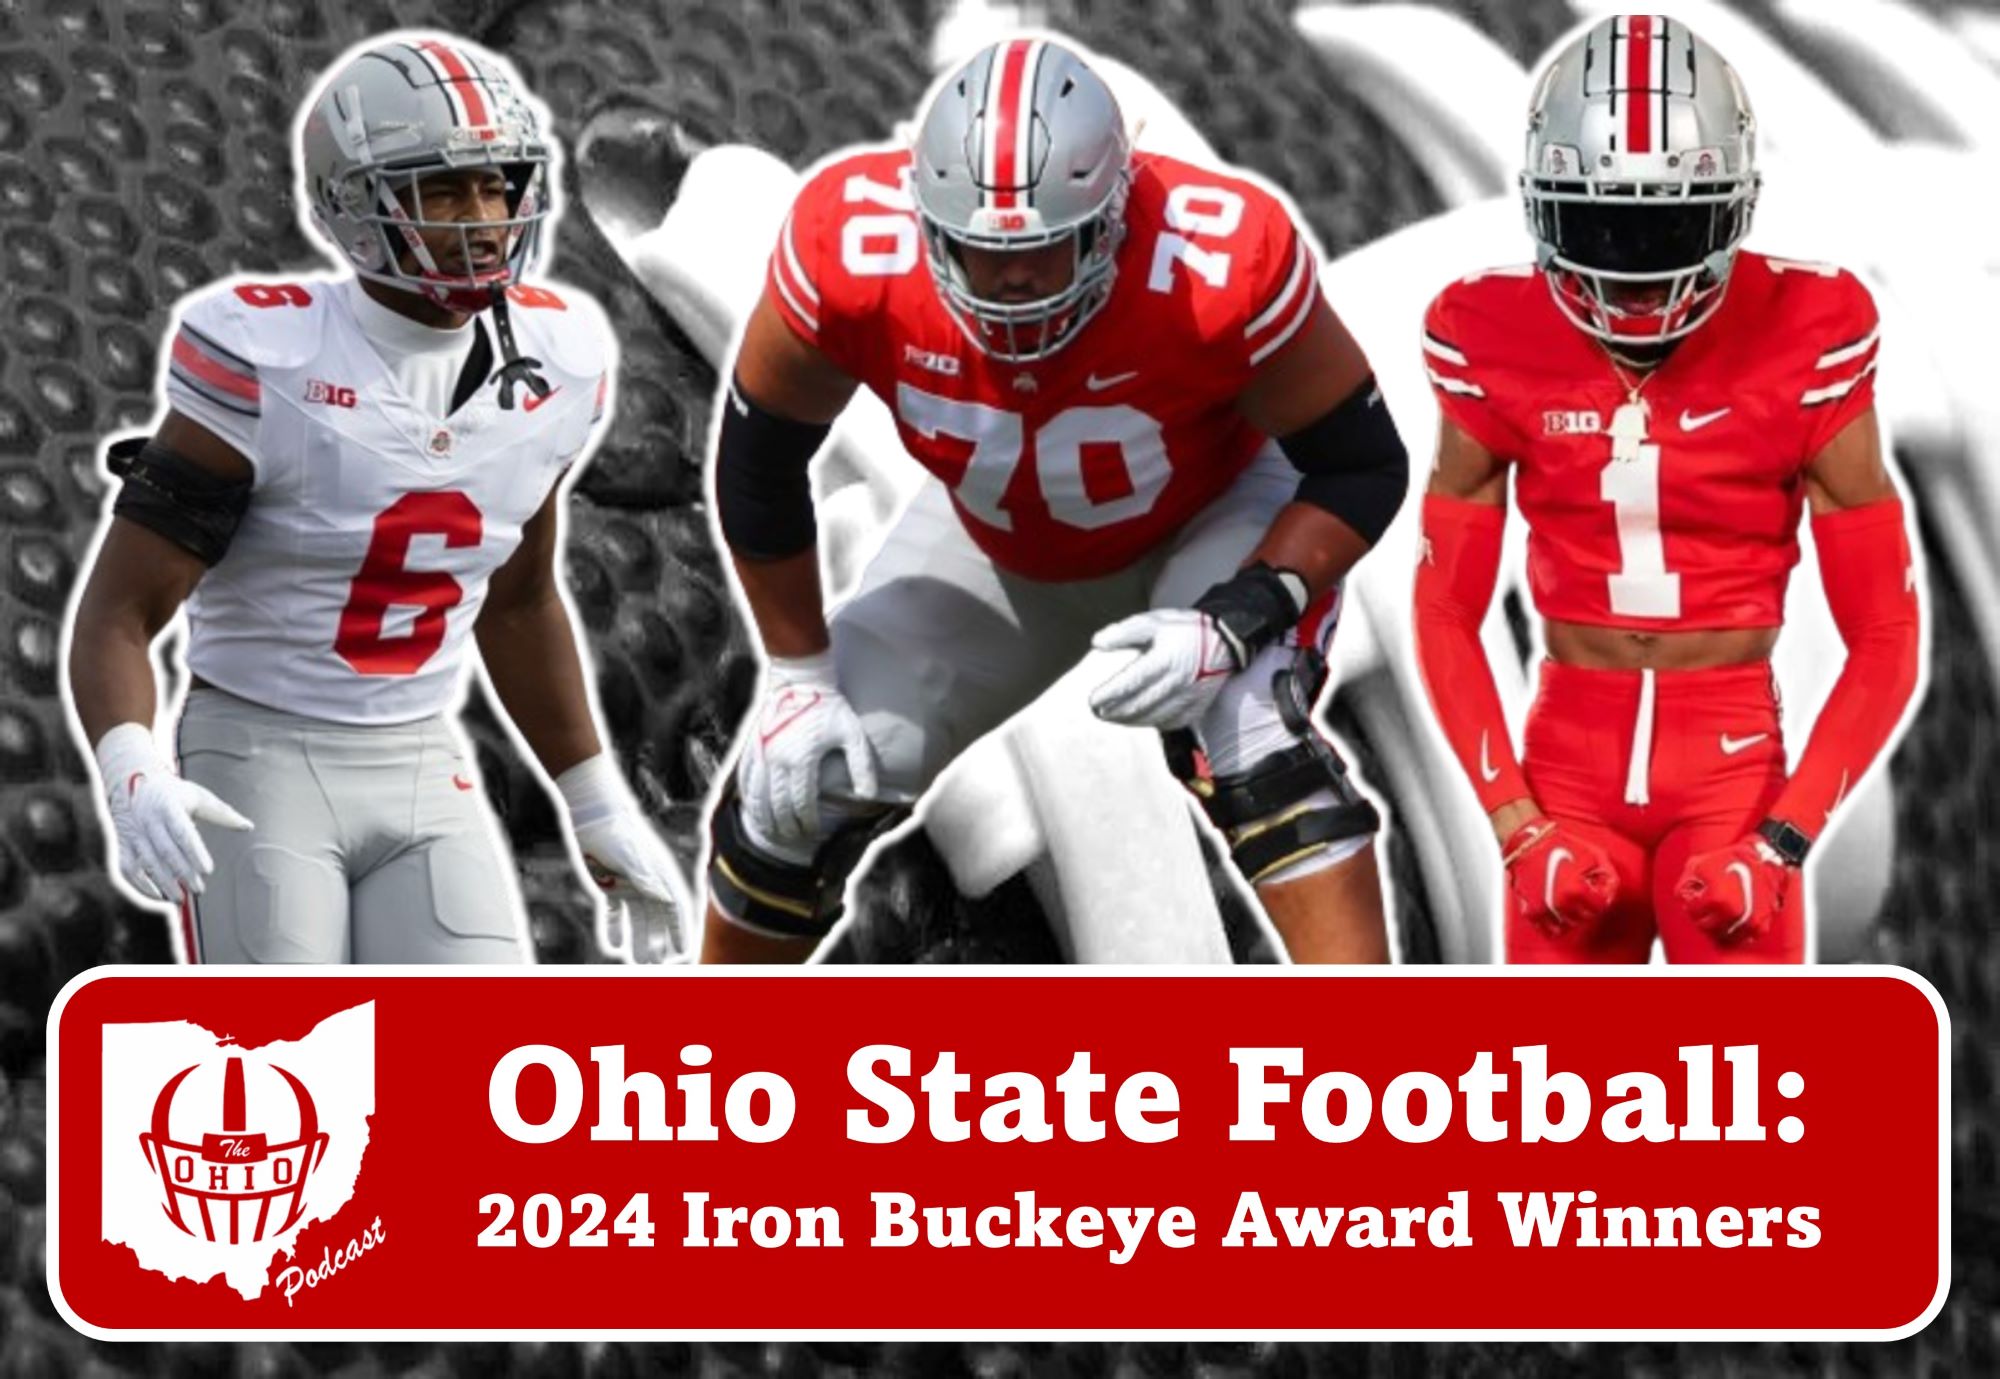 Ohio State Football Announces 2024 Winter Iron Buckeye Award Winners